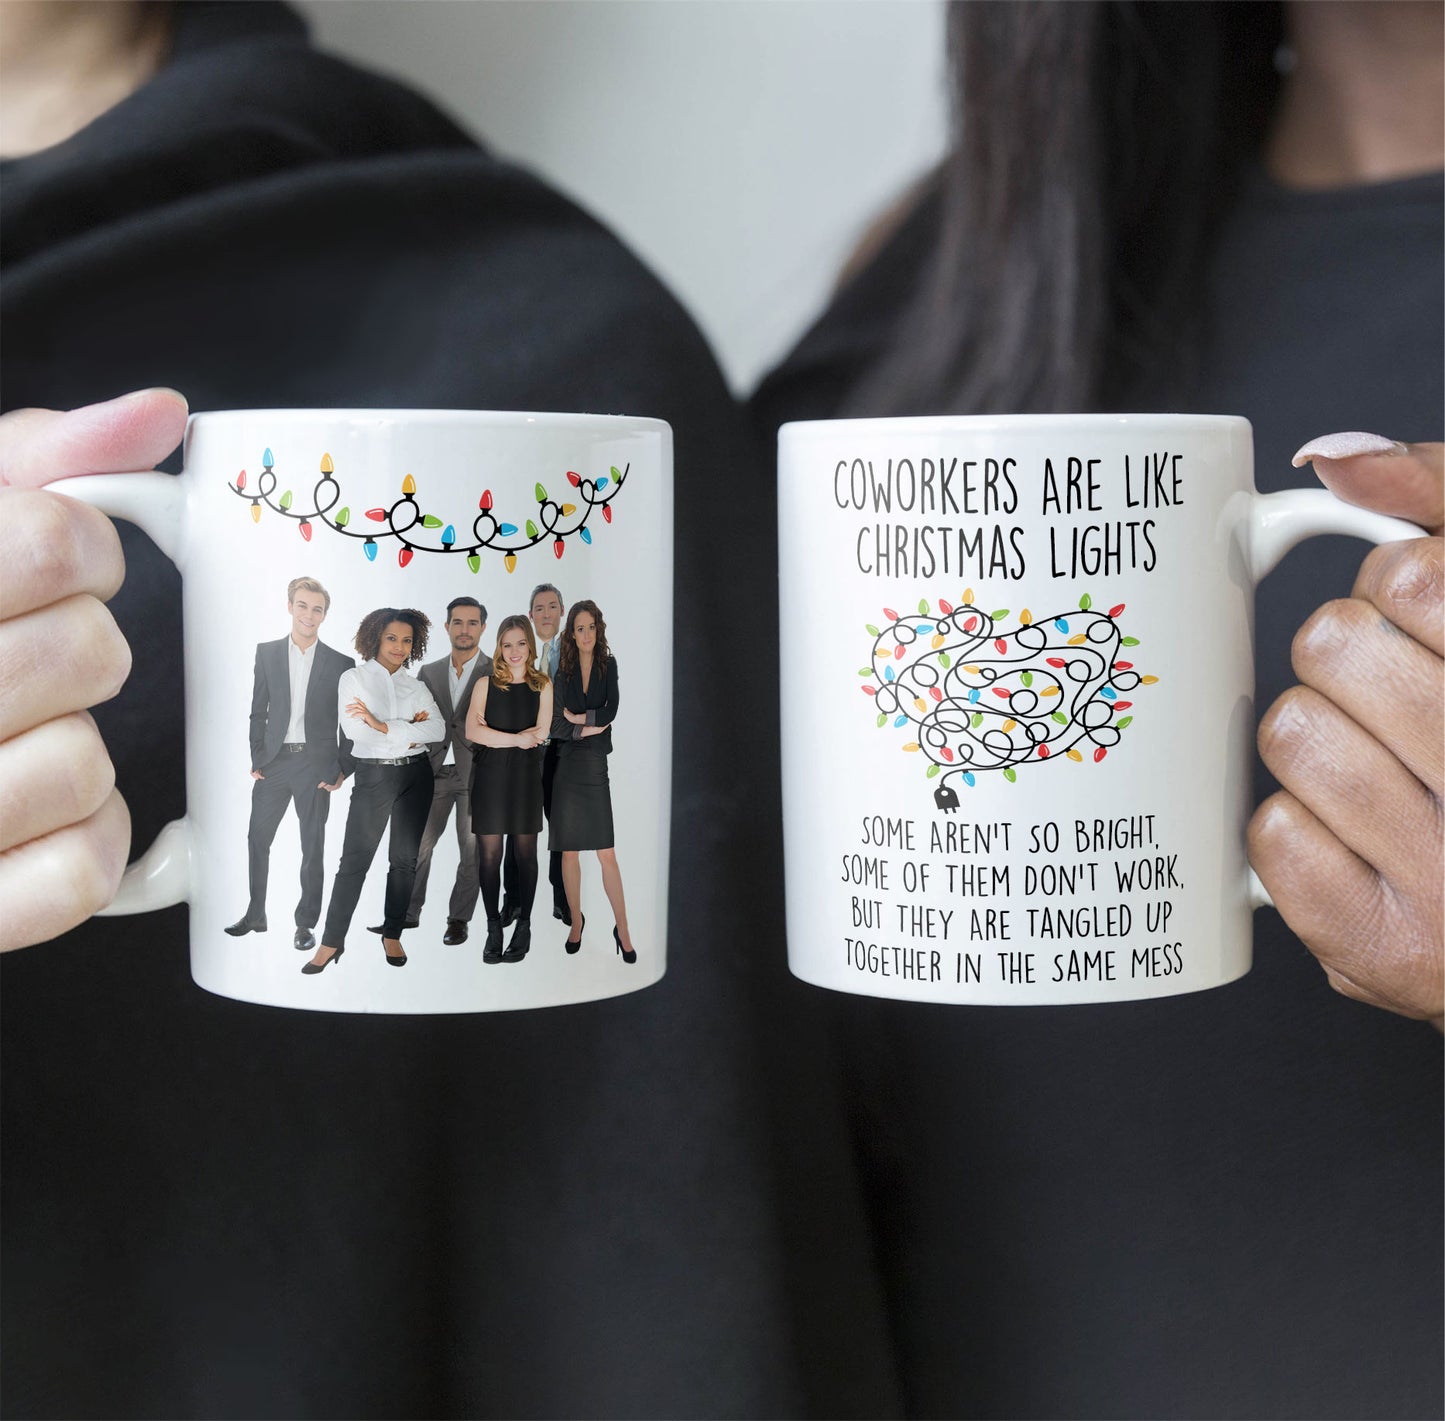 Coworkers Are Like Christmas Lights - Personalized Photo Mug